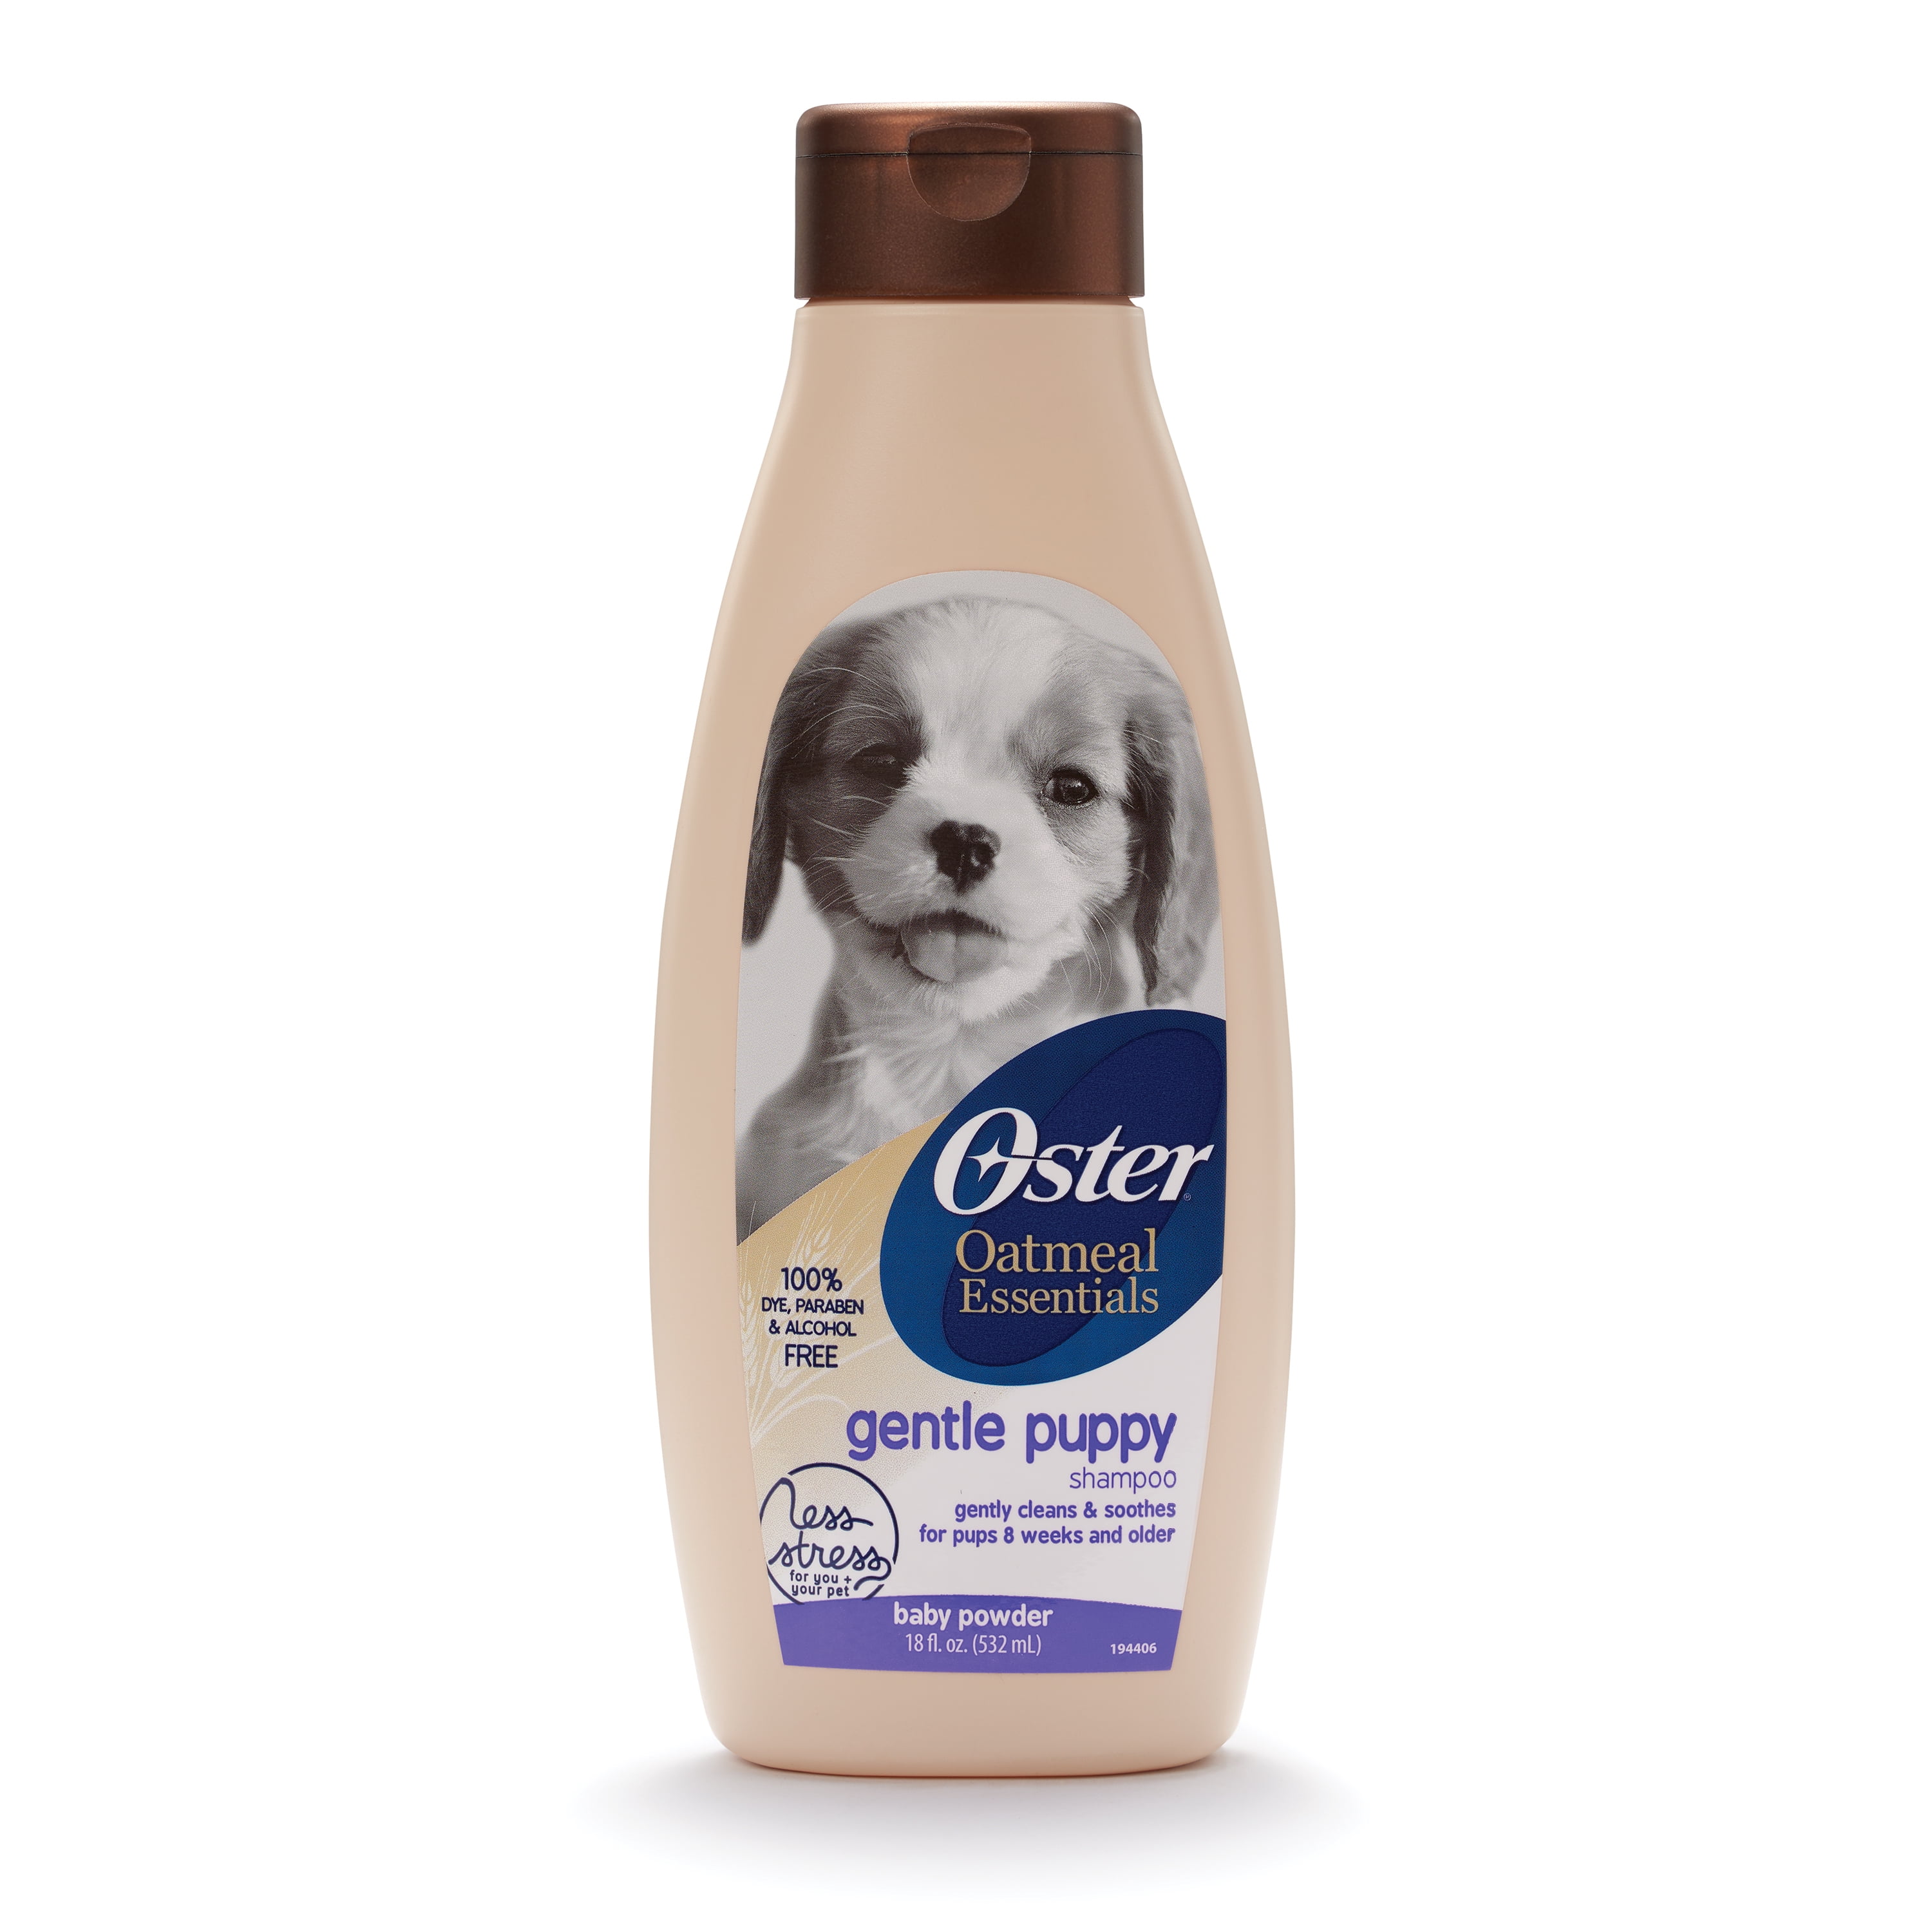 Oster Oatmeal Essentials Puppy Shampoo, Baby Powder Scent, 18 oz